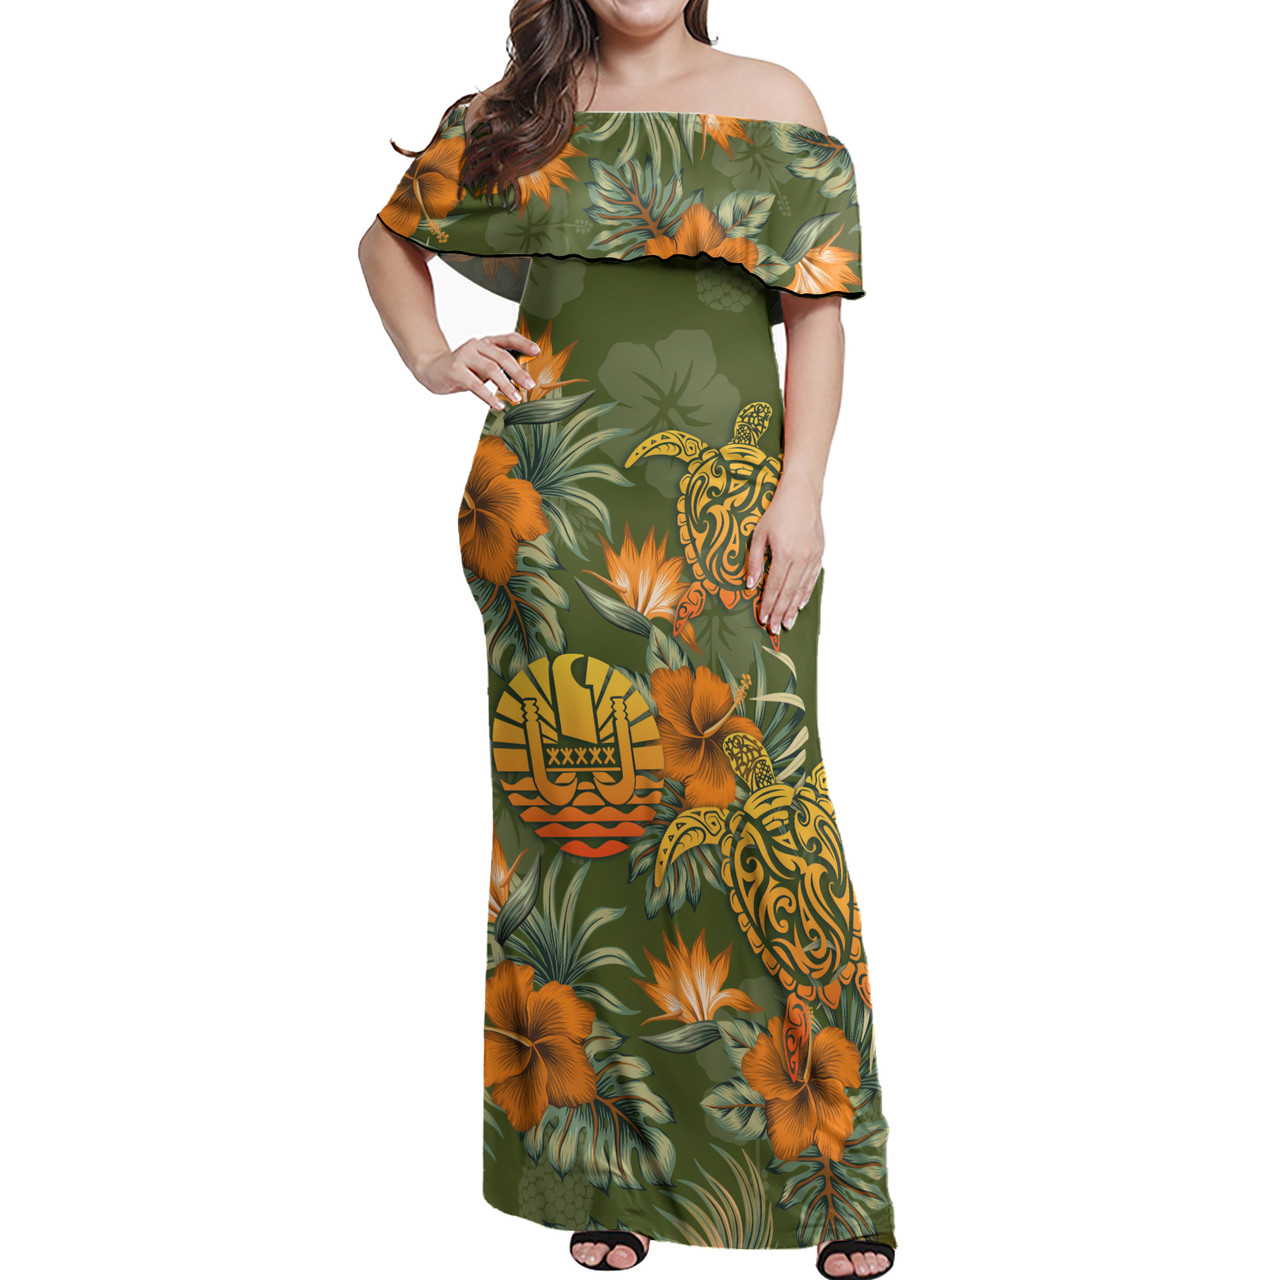 Tahiti Polynesian Pattern Combo Dress And Shirt Tropical Summer